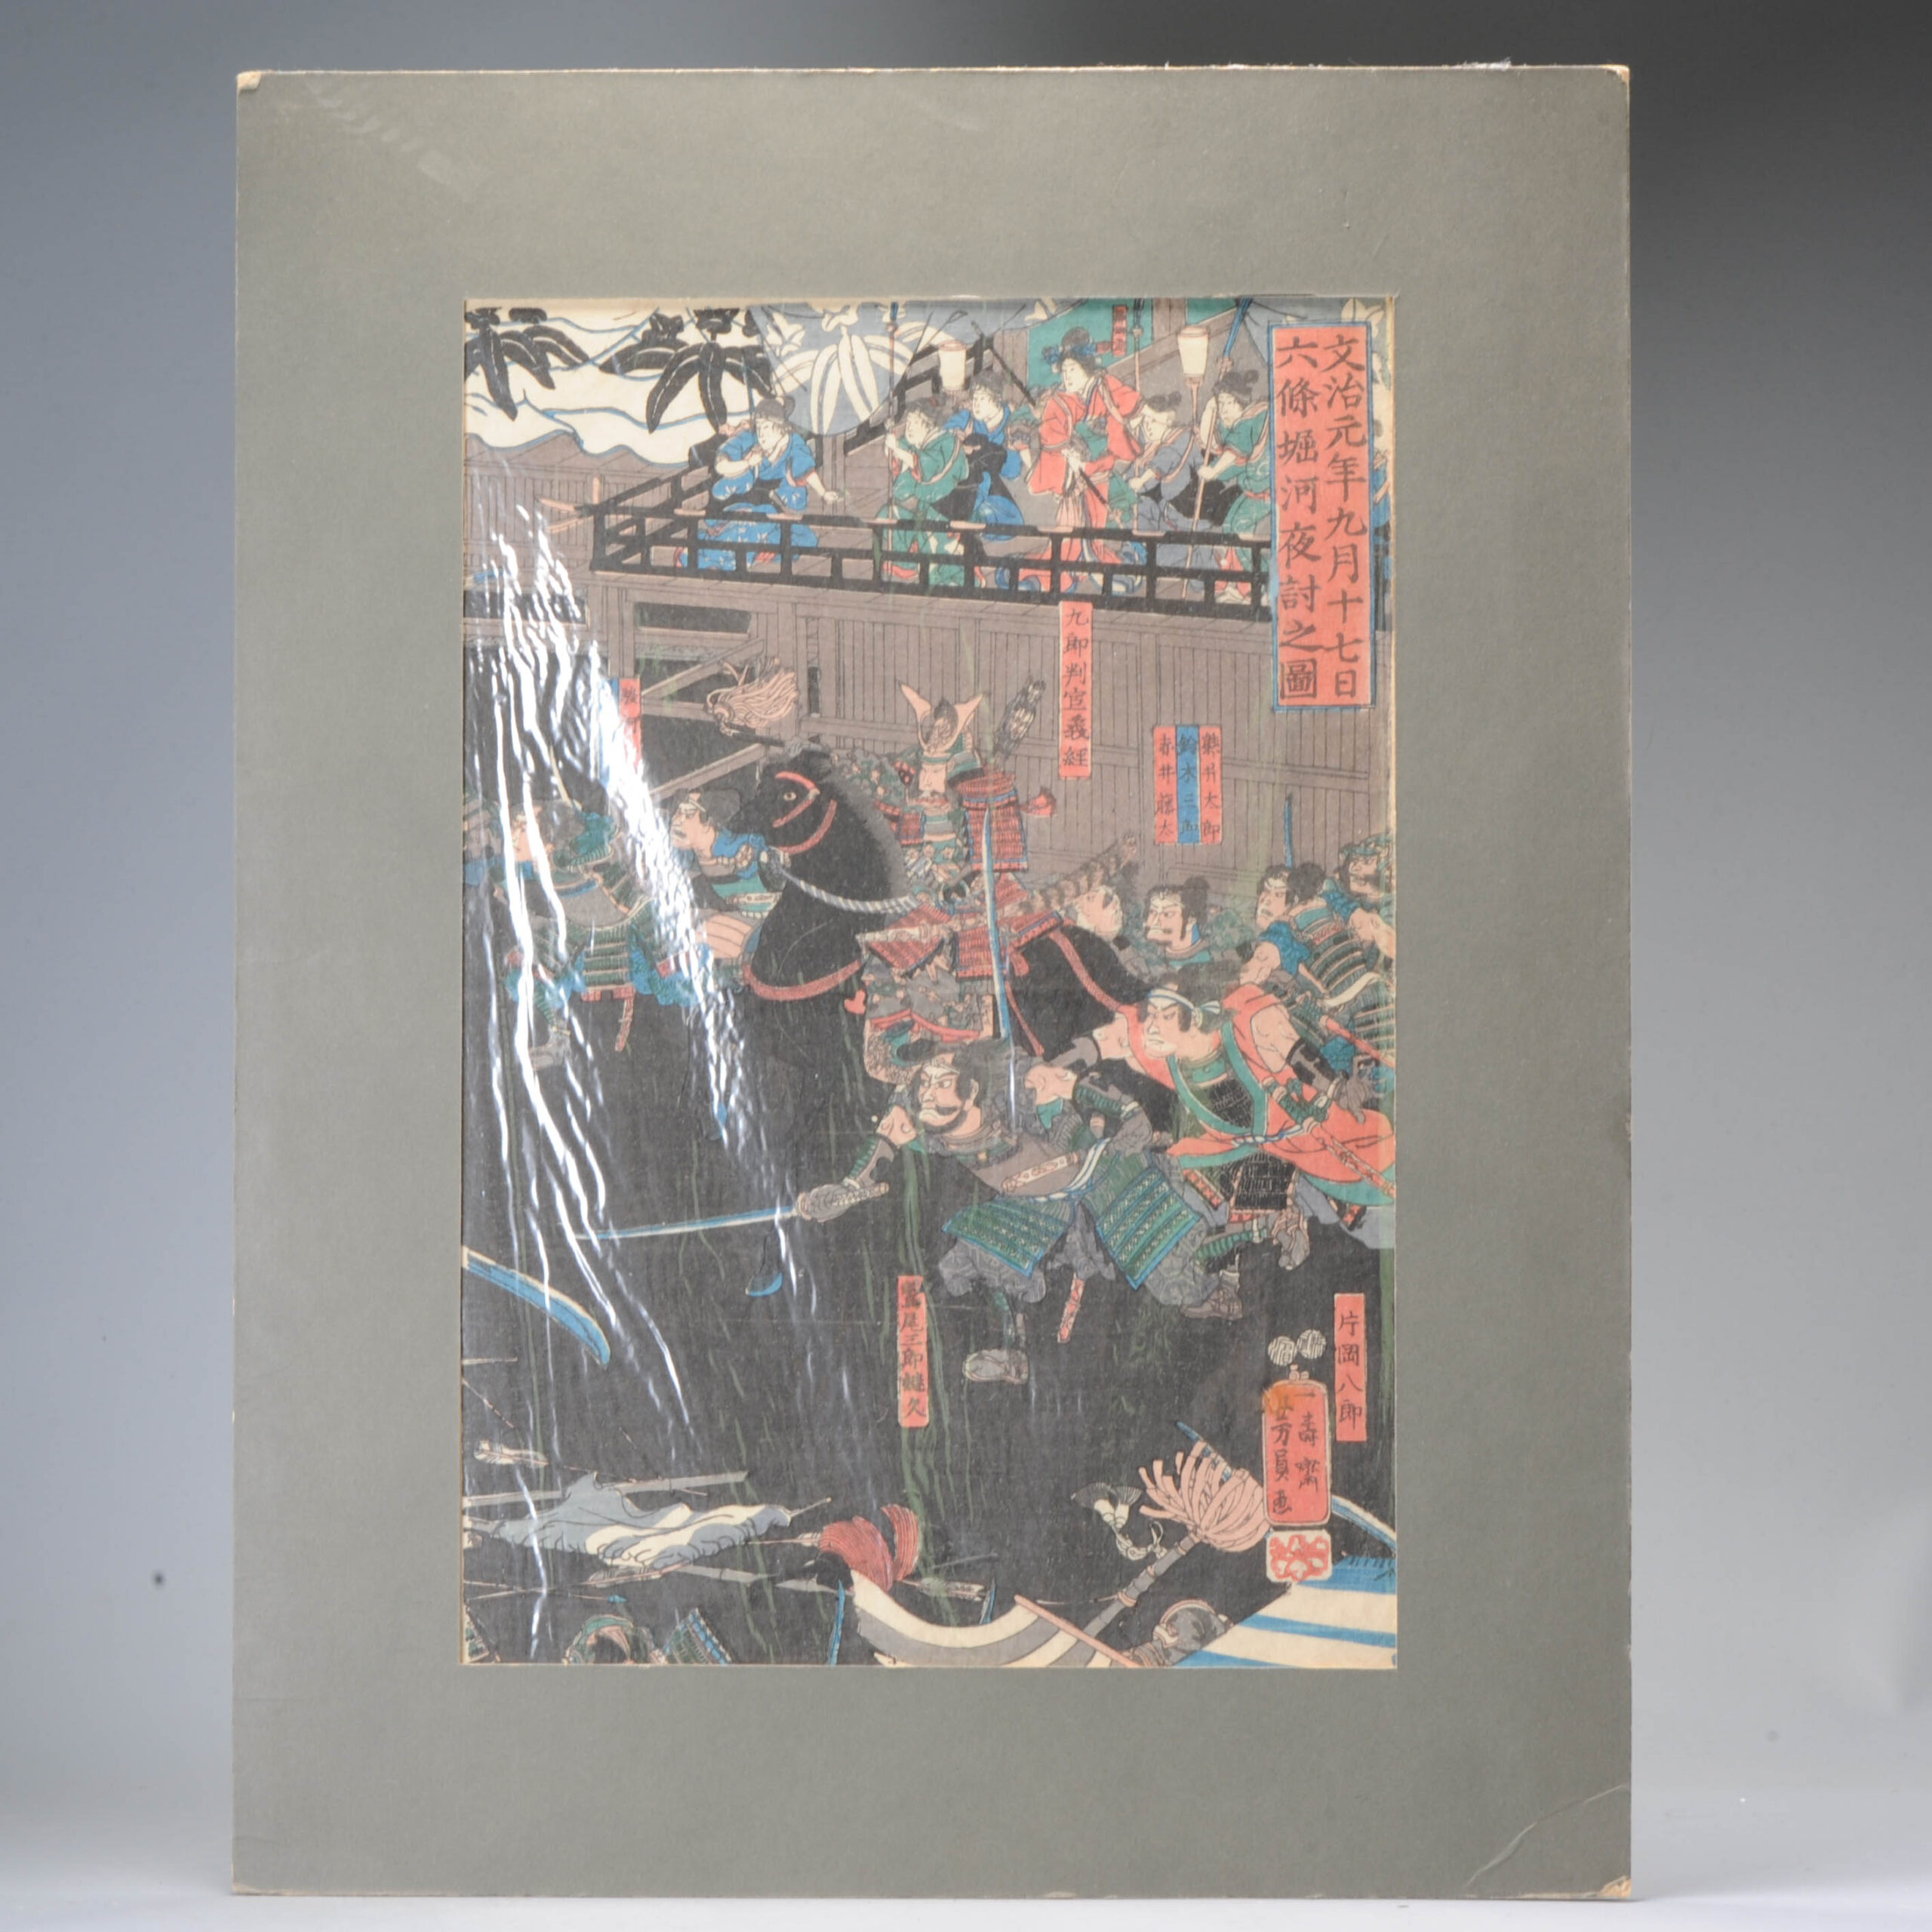 Japanese Wood Block Prints “Four Seasons of Tokyo” Uchida Wood Block Printing Co., Kyoto